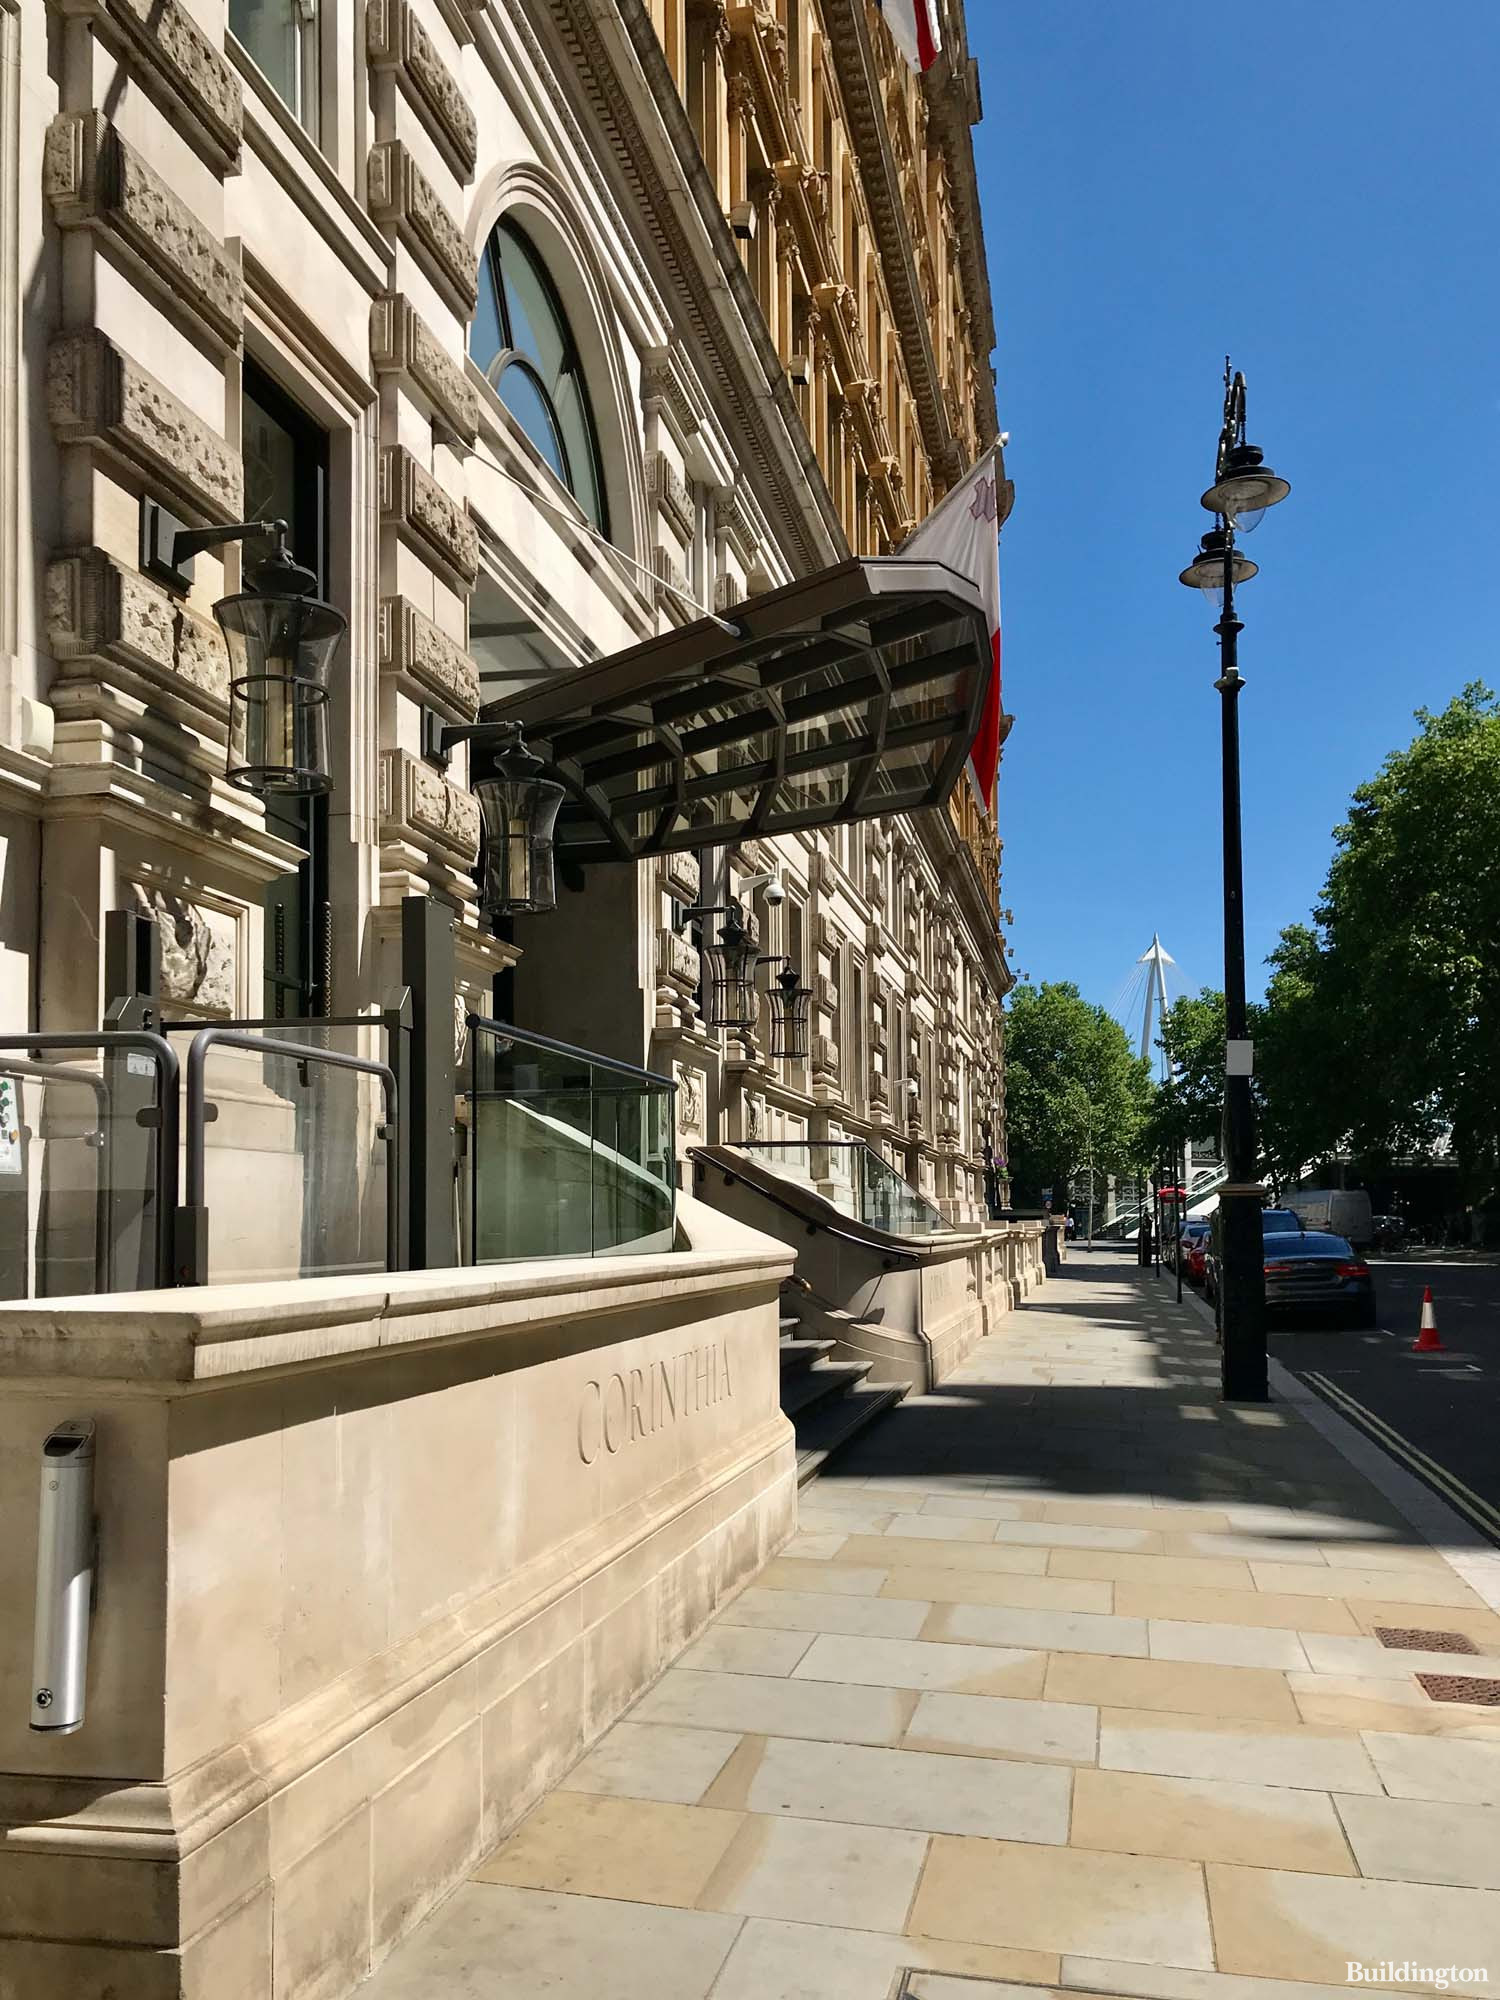 Entrance to Corinthia Hotel on Whitehall Place.